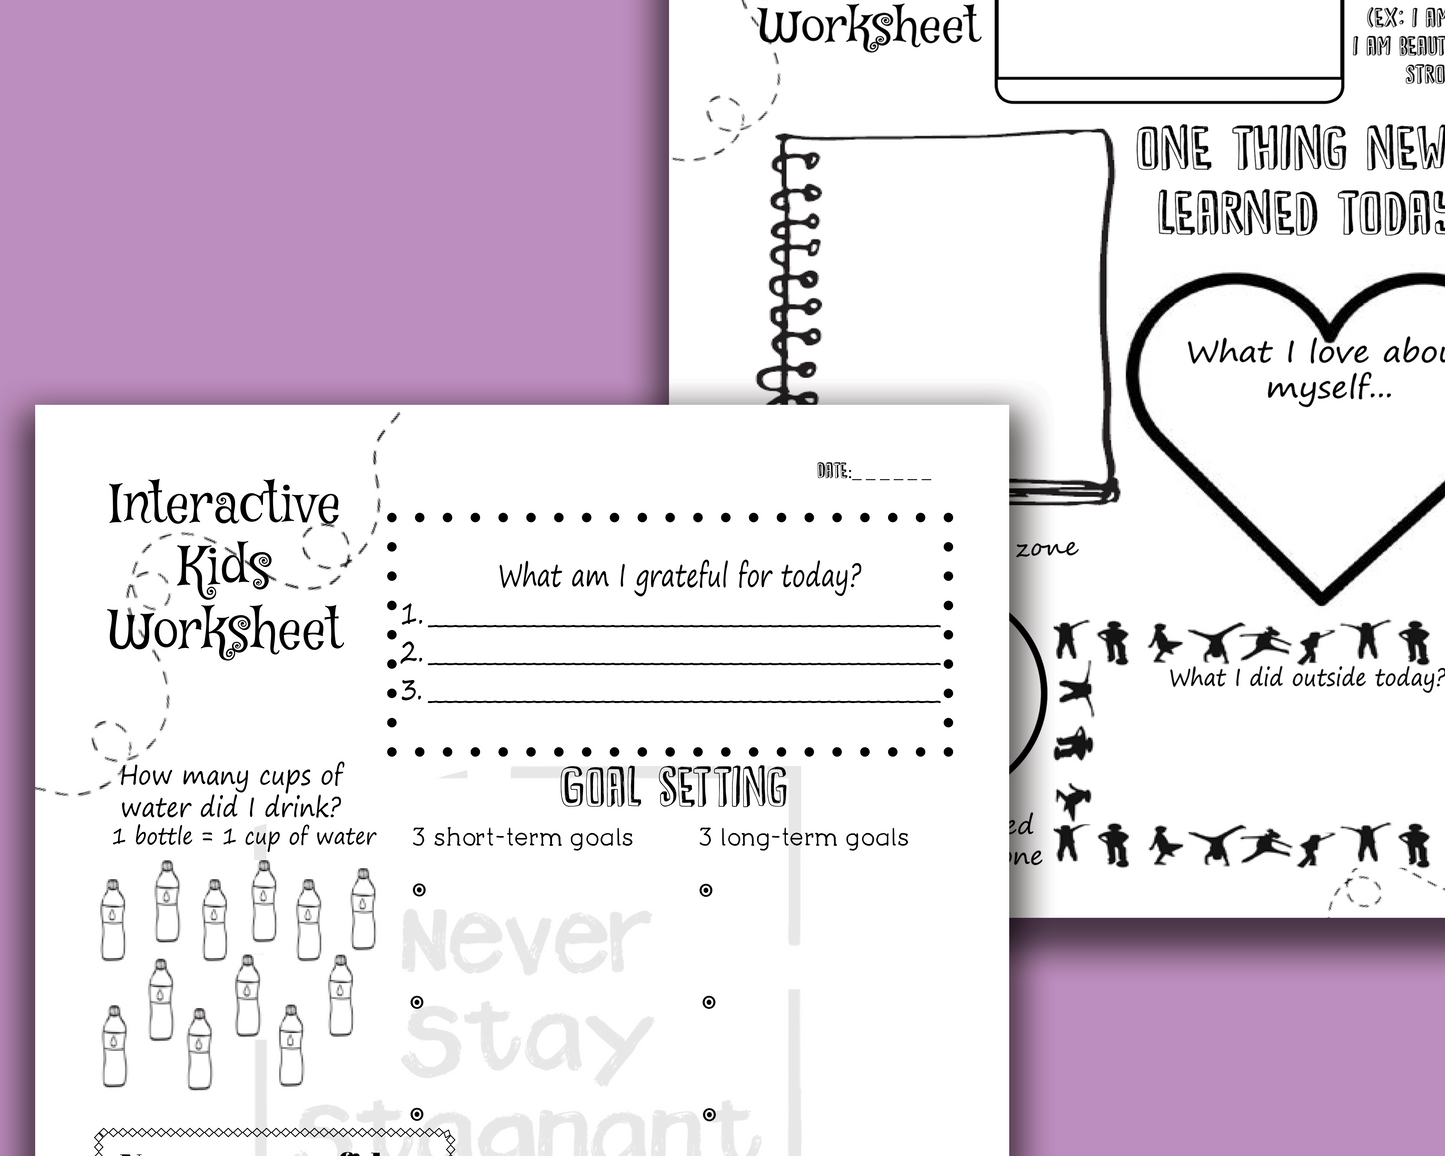 Interactive Kids Worksheets Digital Download